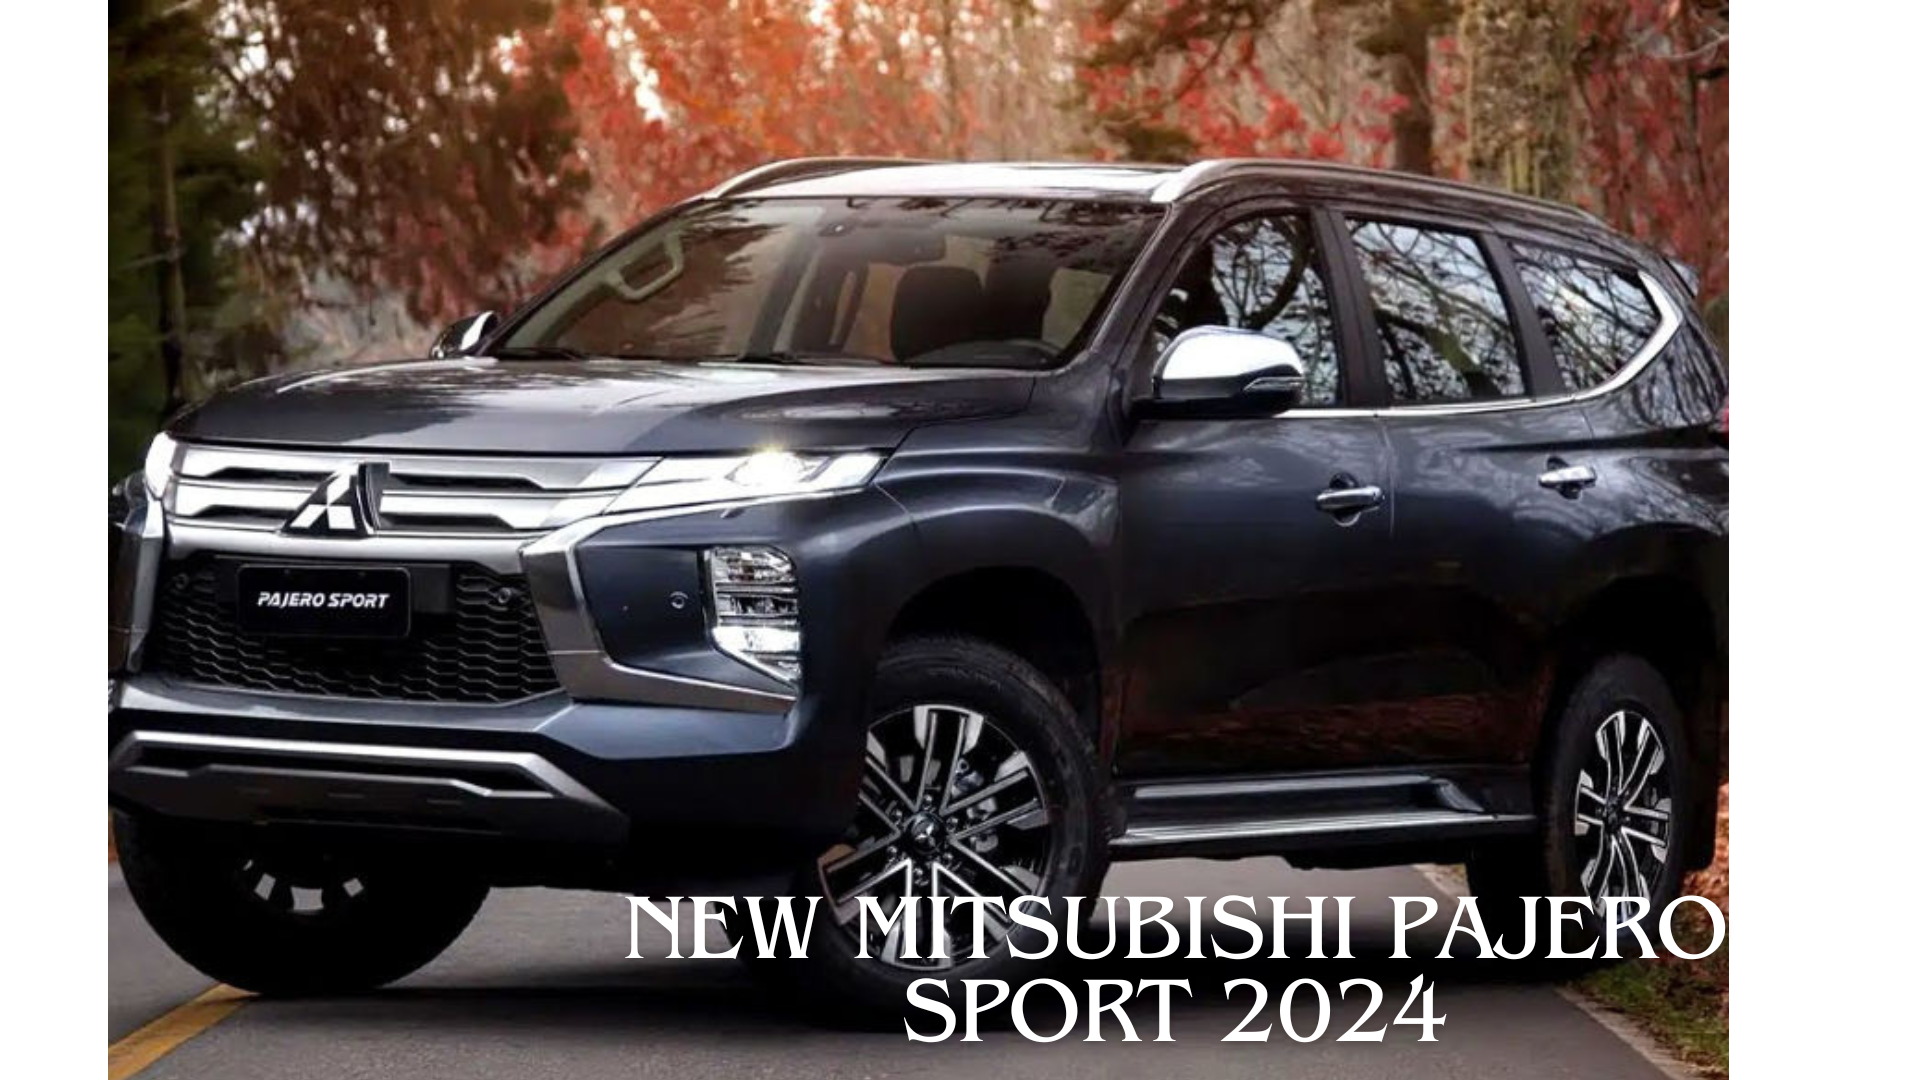 New Mitsubishi Pajero Sport 2024, Saingan Terbaru Bagi Toyota Fortuner